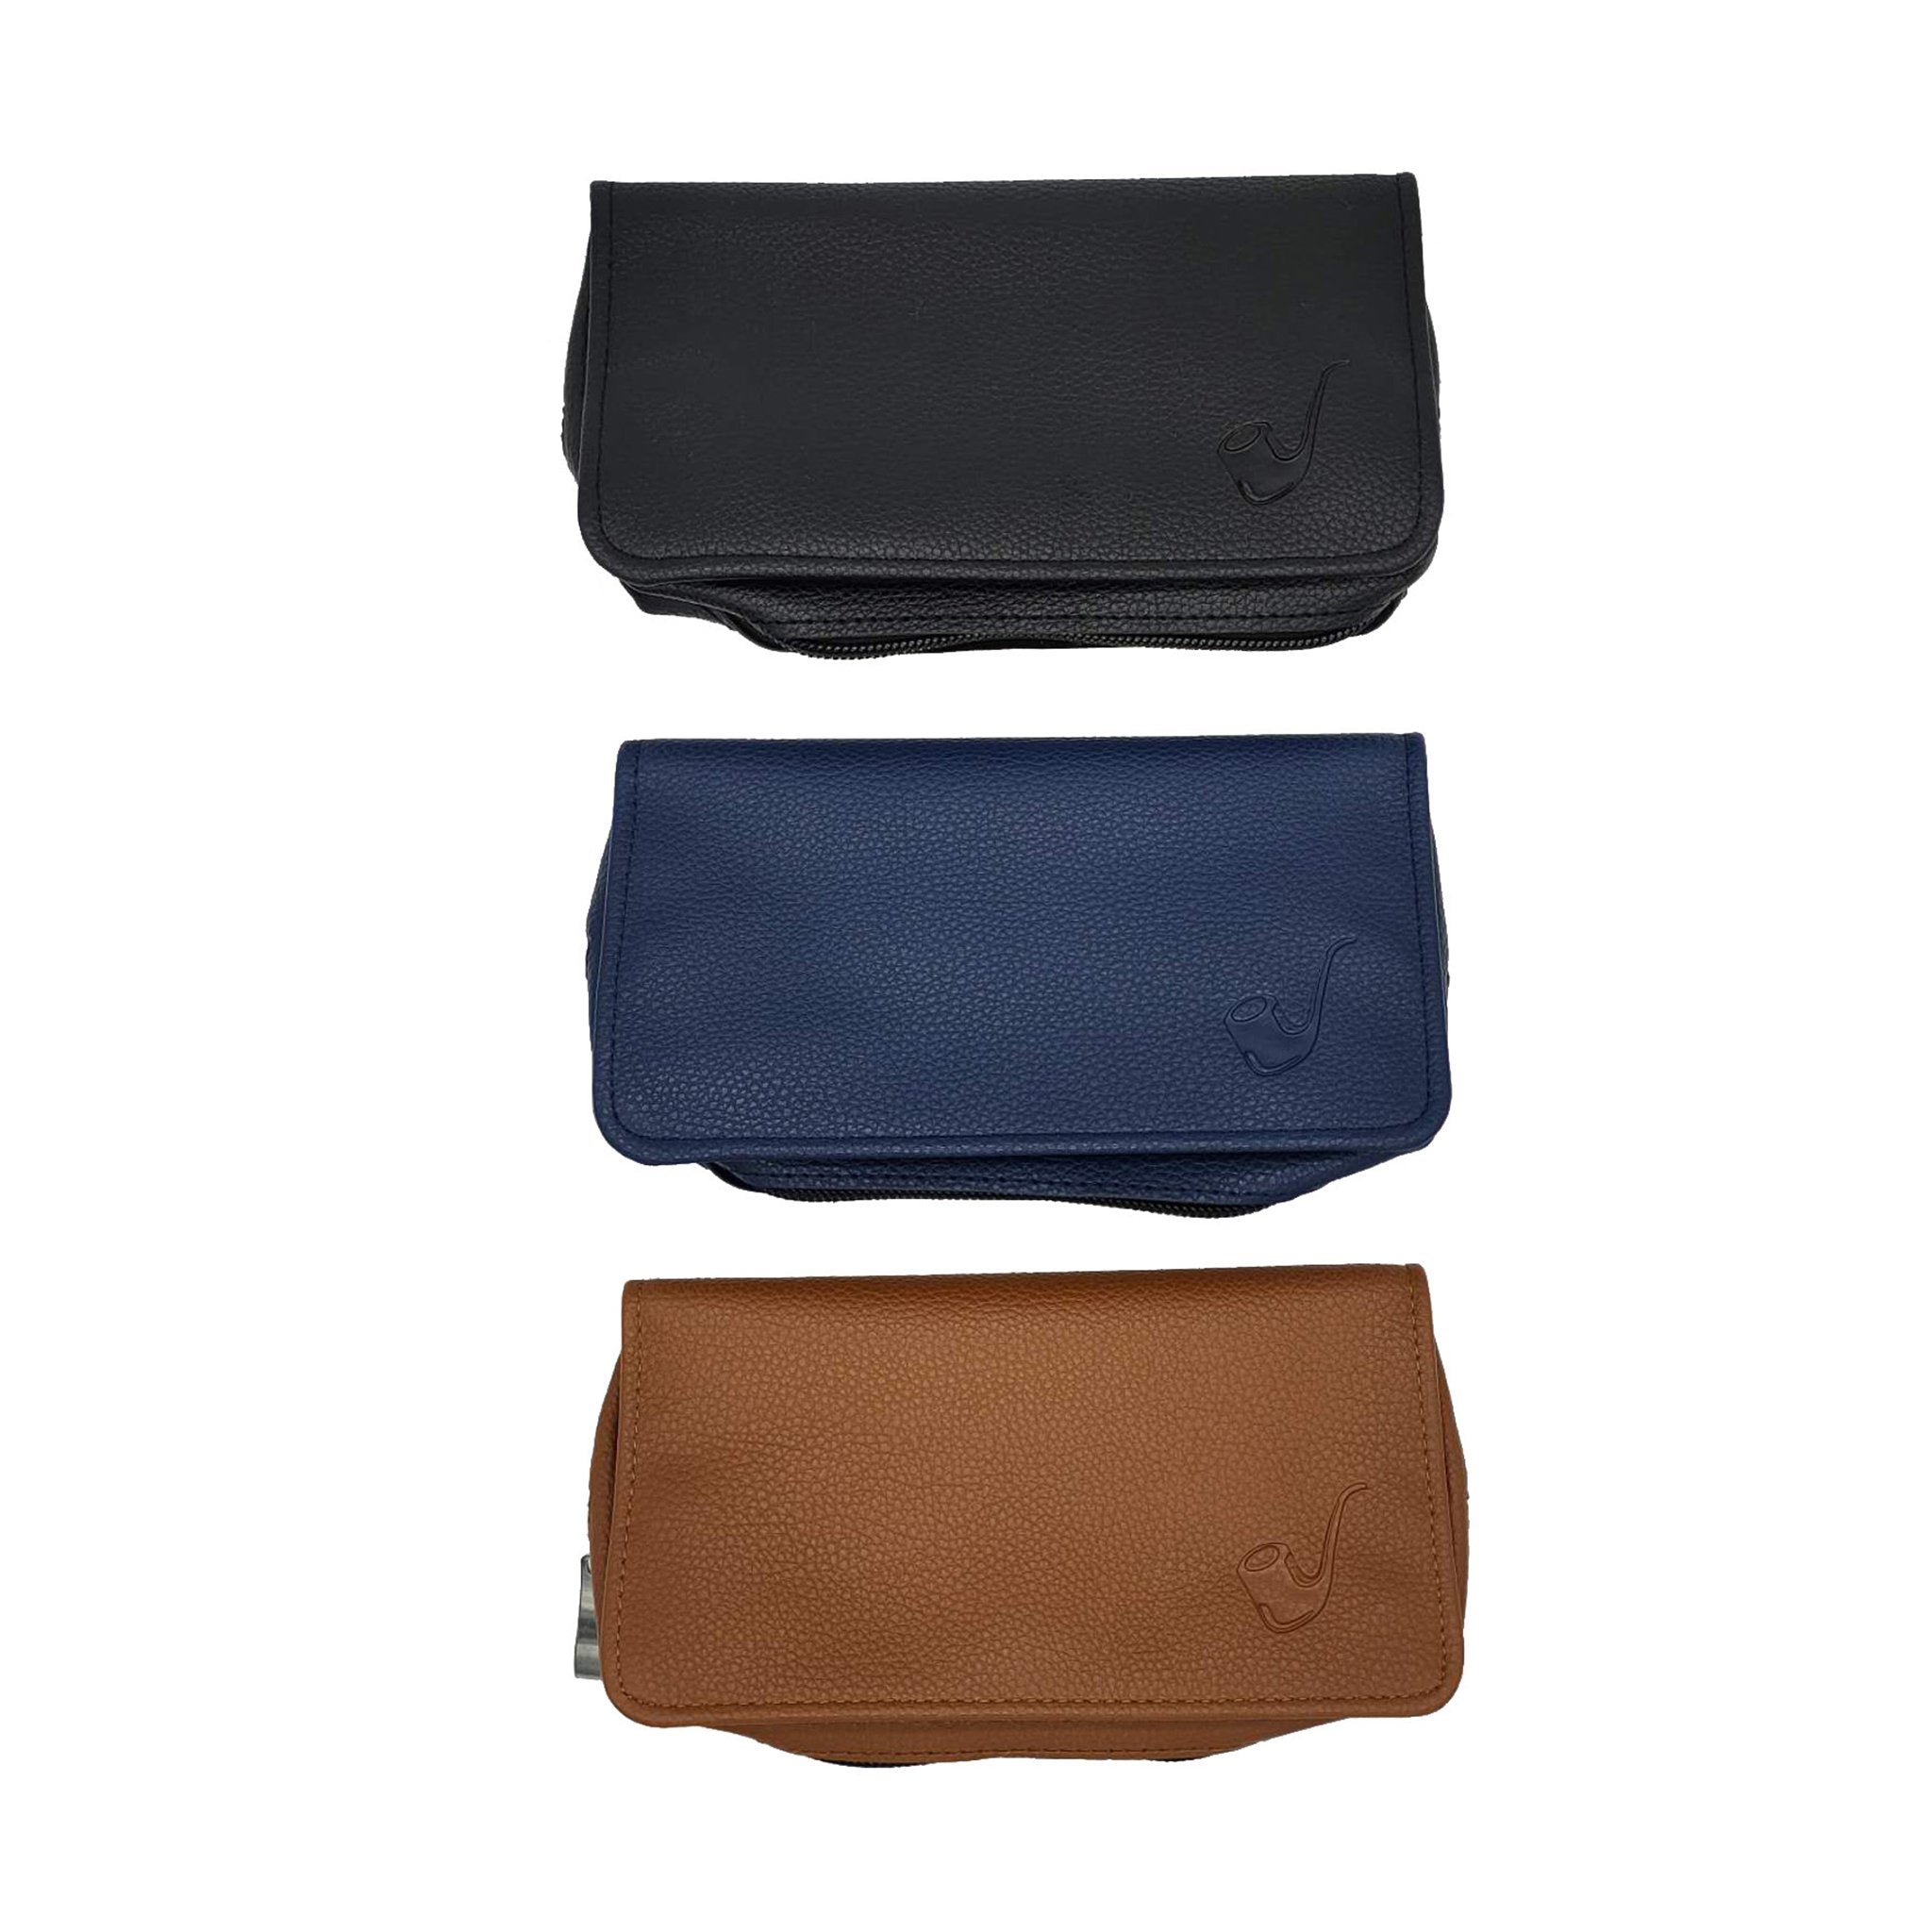 Cyri Messenger Bag Men's Leather Waist Pack Bags Fashion Cigarette Phone  Case Money Belt for Travel Security Wallet Purse : Amazon.in: Fashion